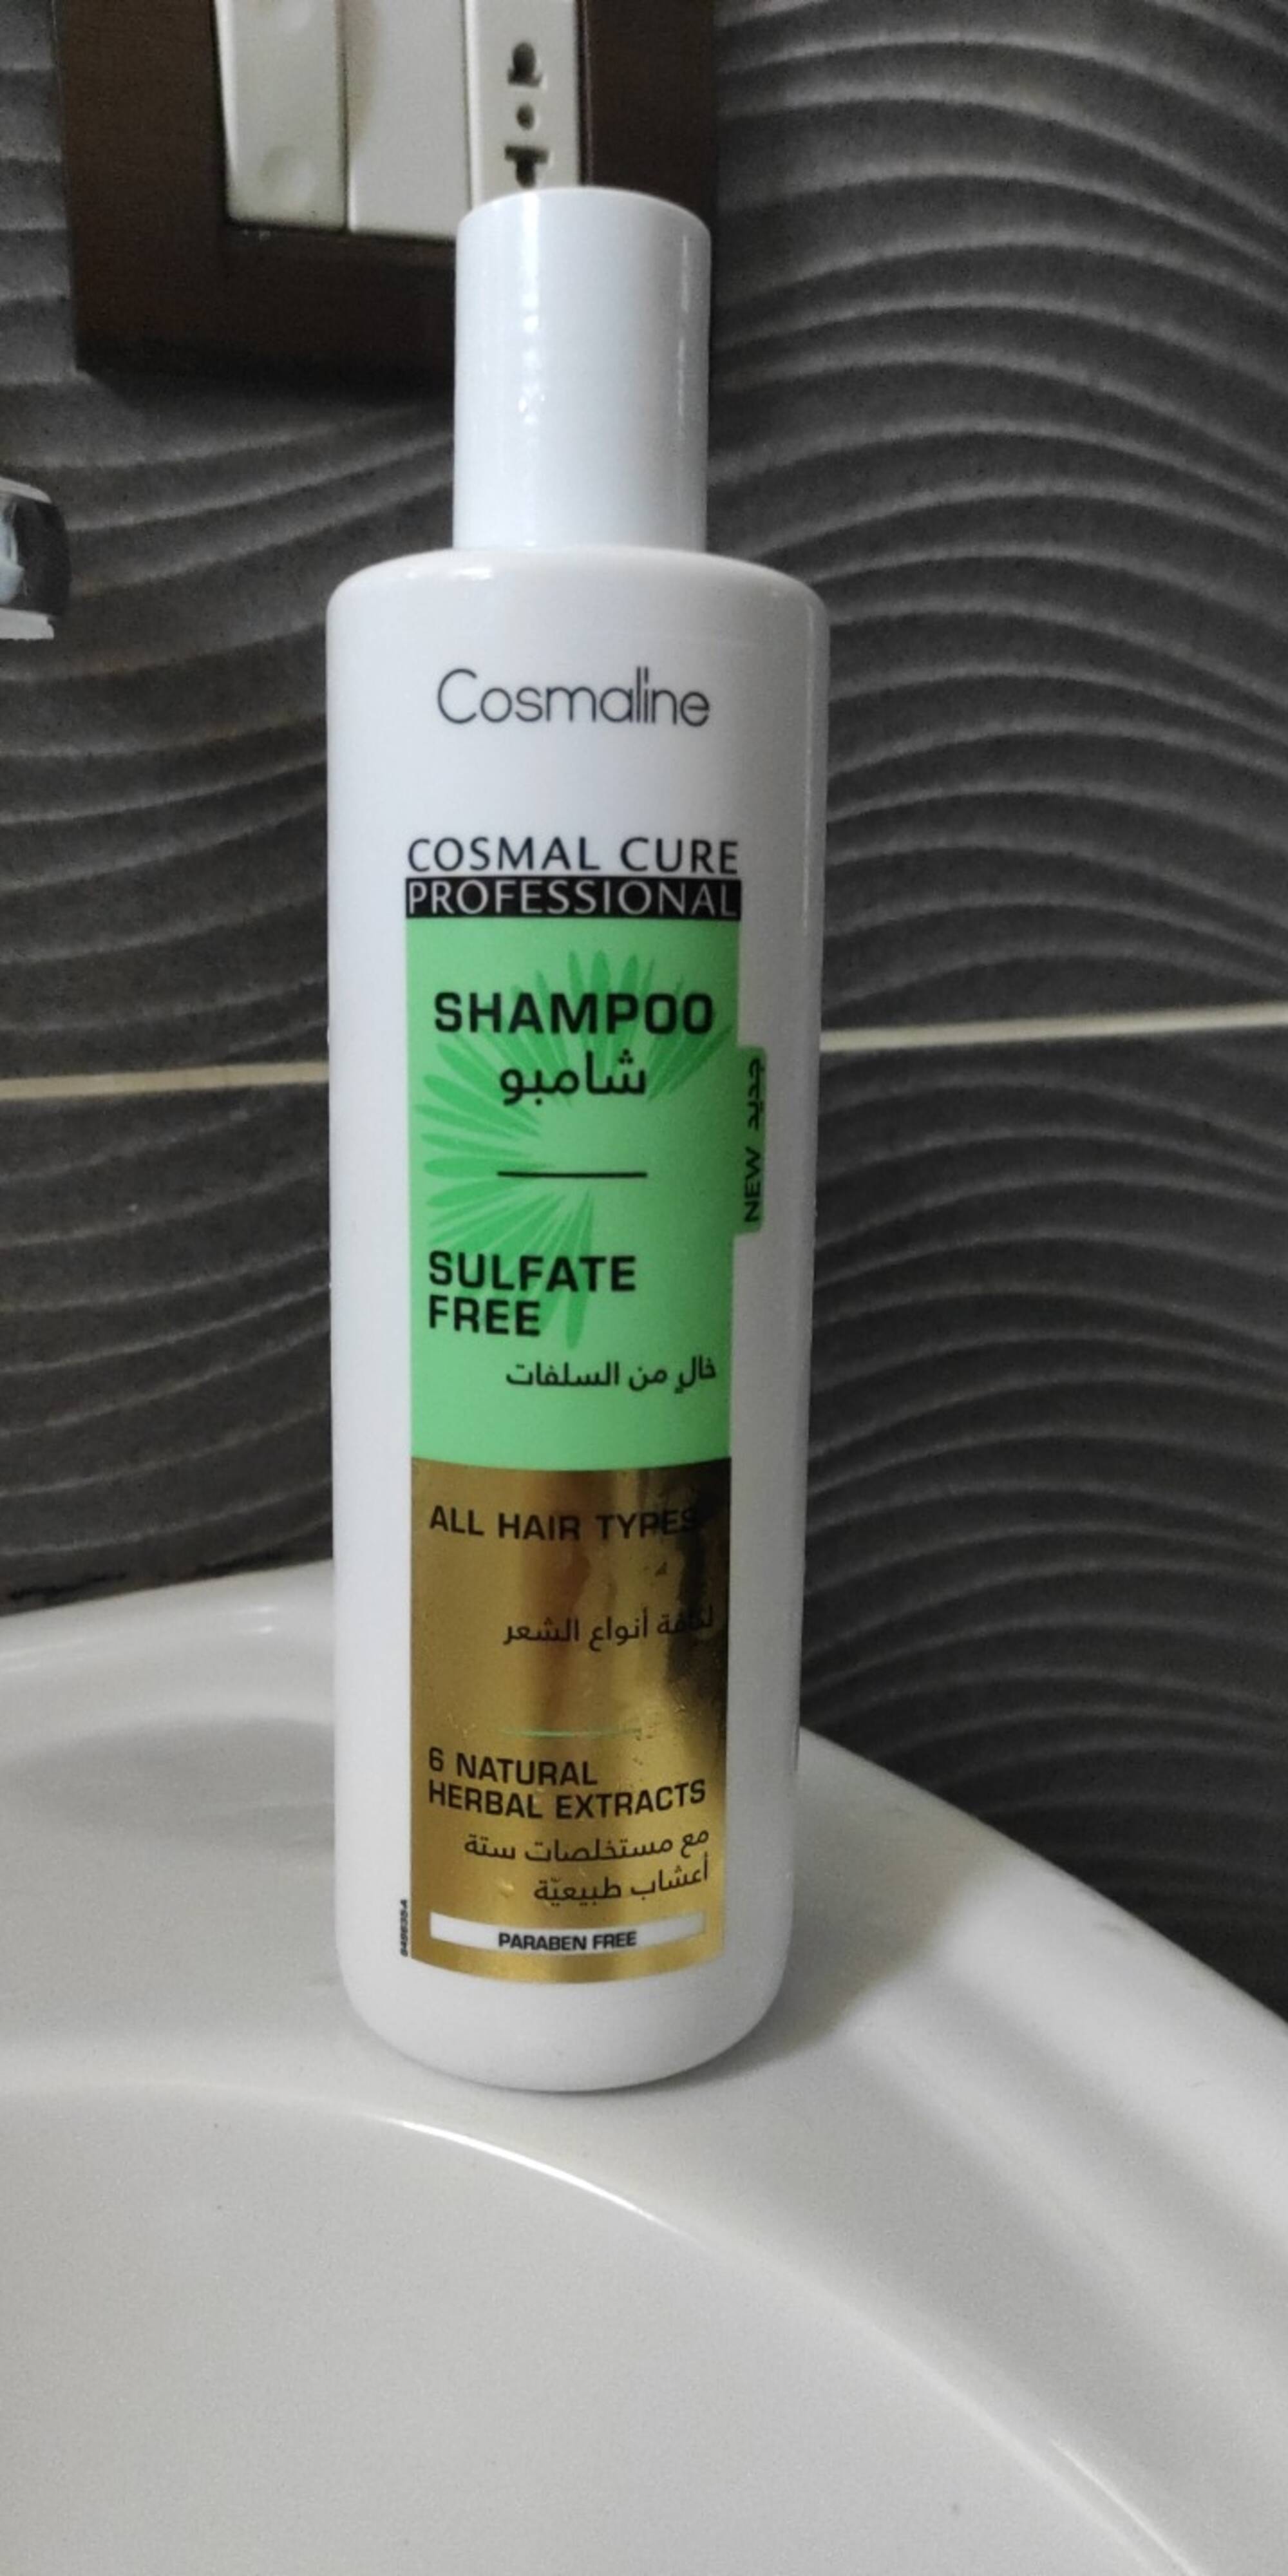 COSMALINE - Cosmal cure - Shampoo sulfate free